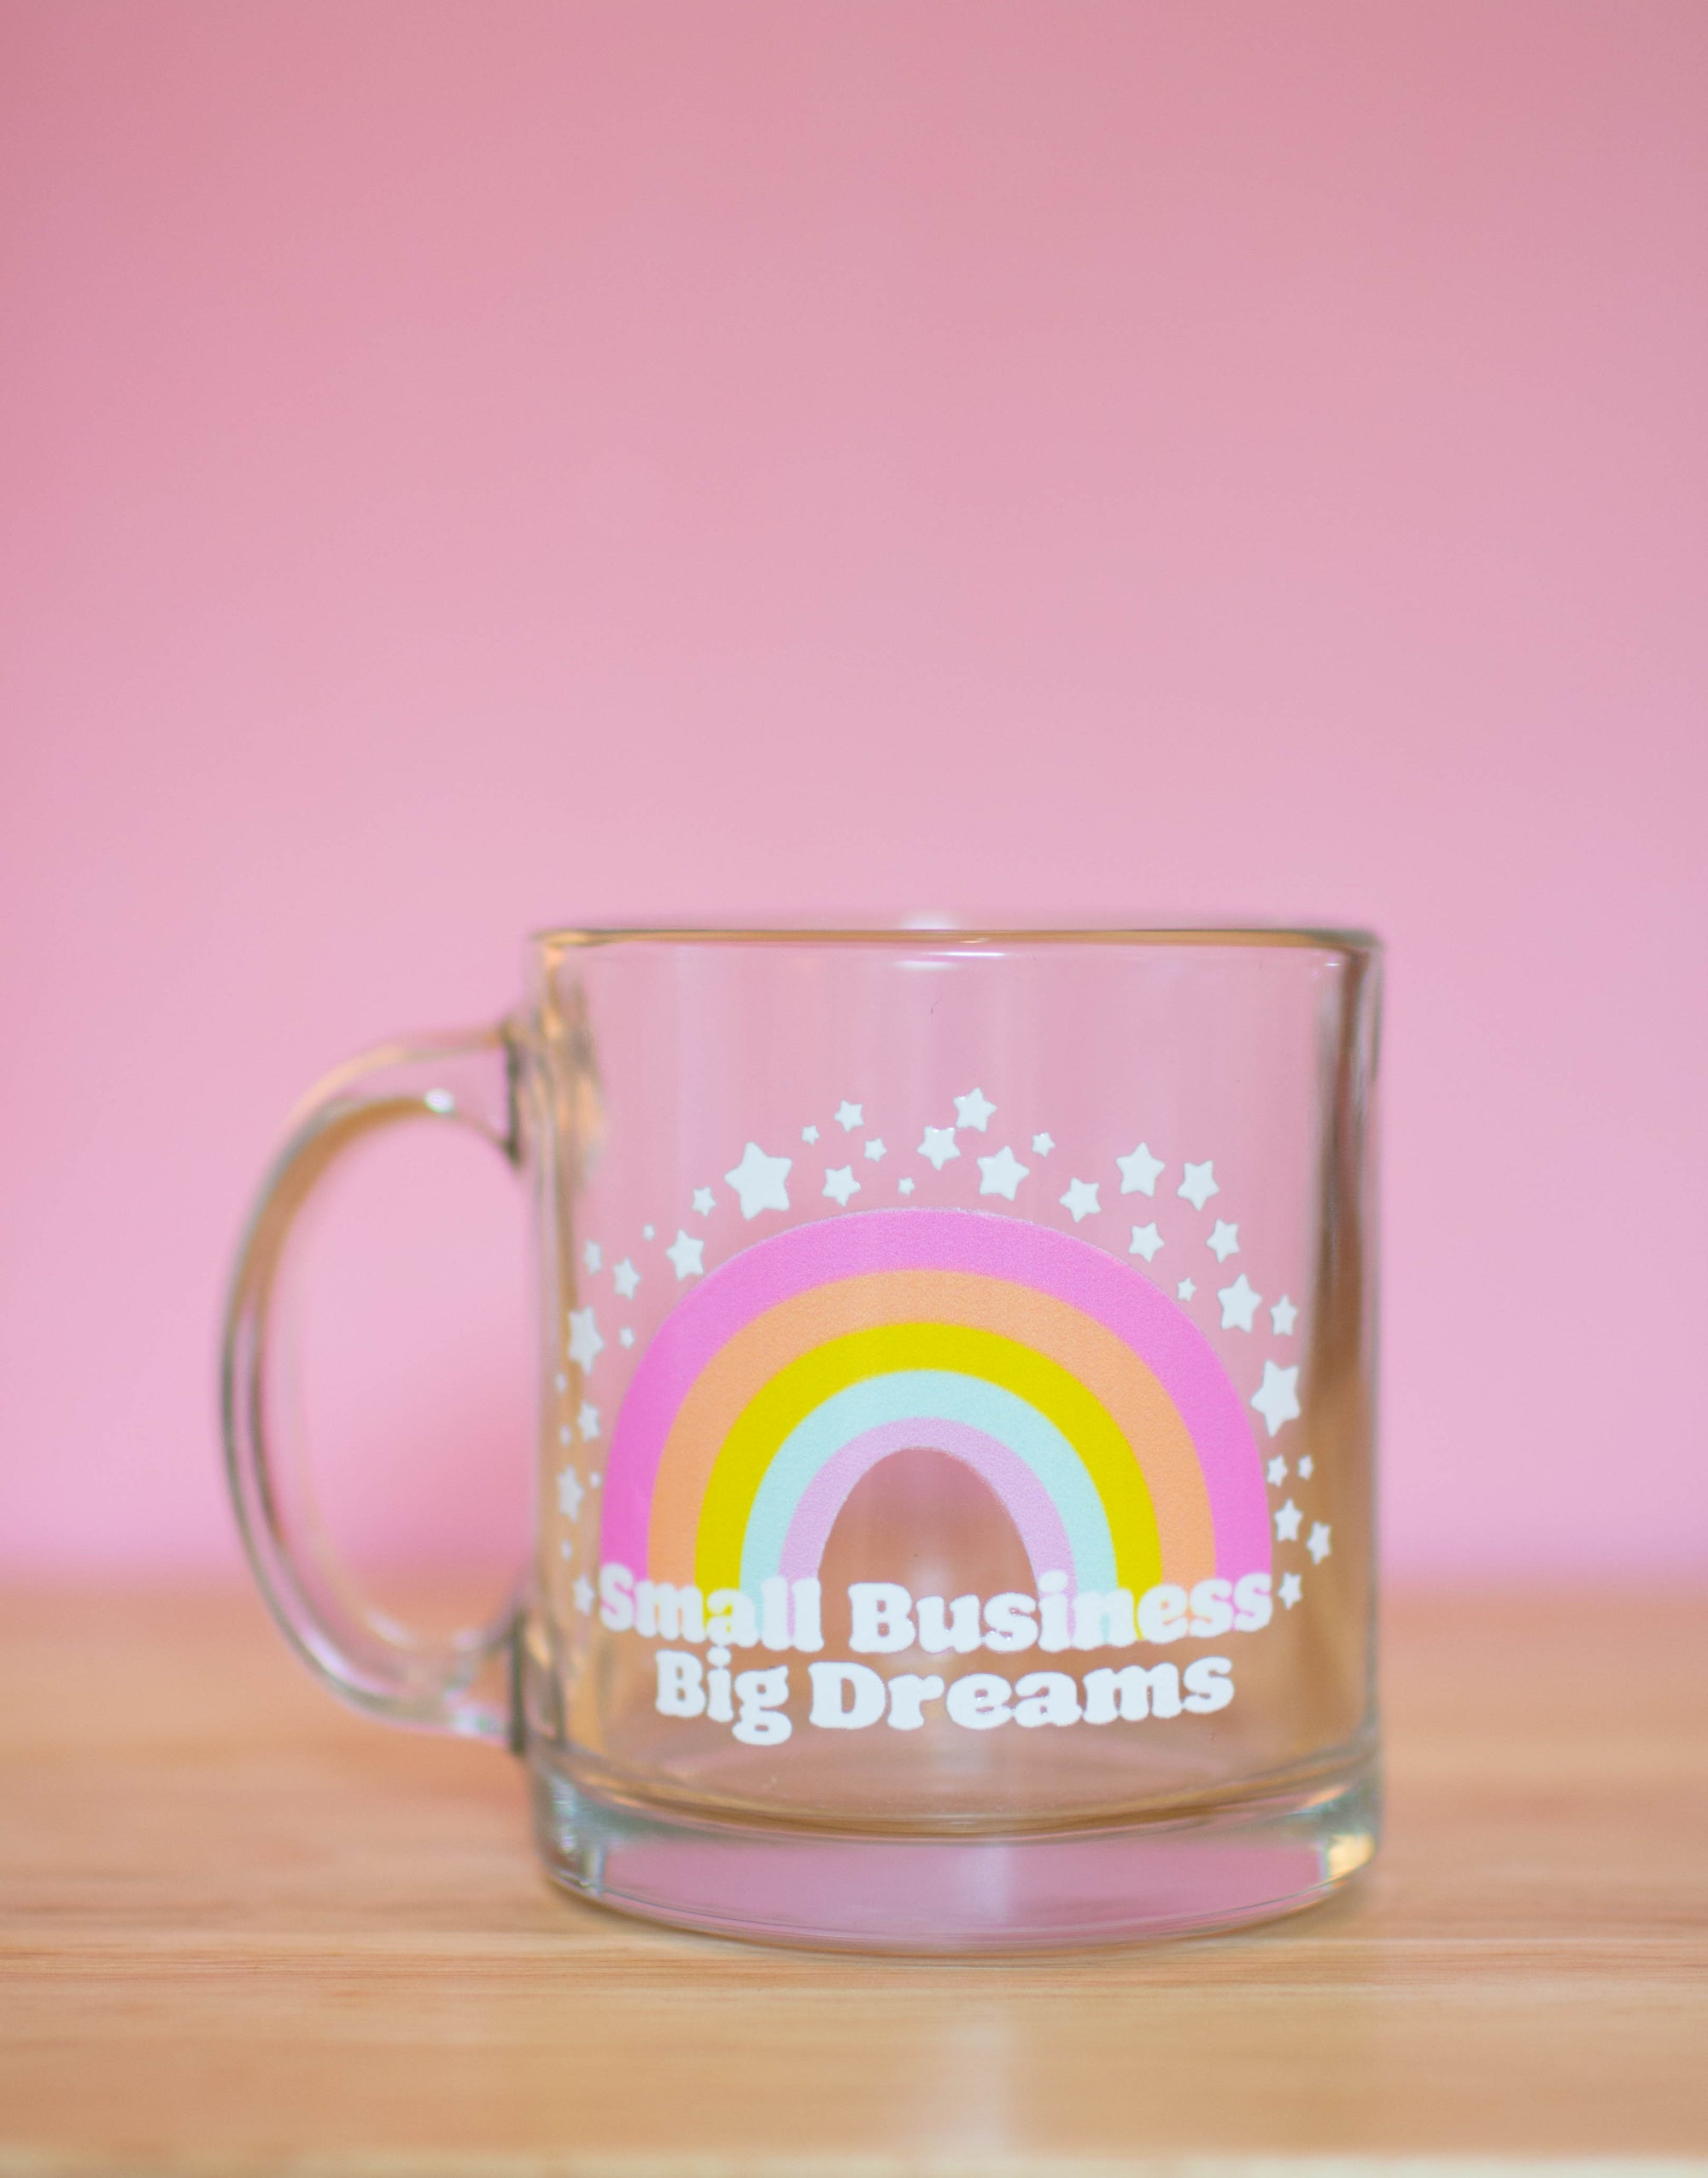 Small Business Big Dreams 13oz Mug